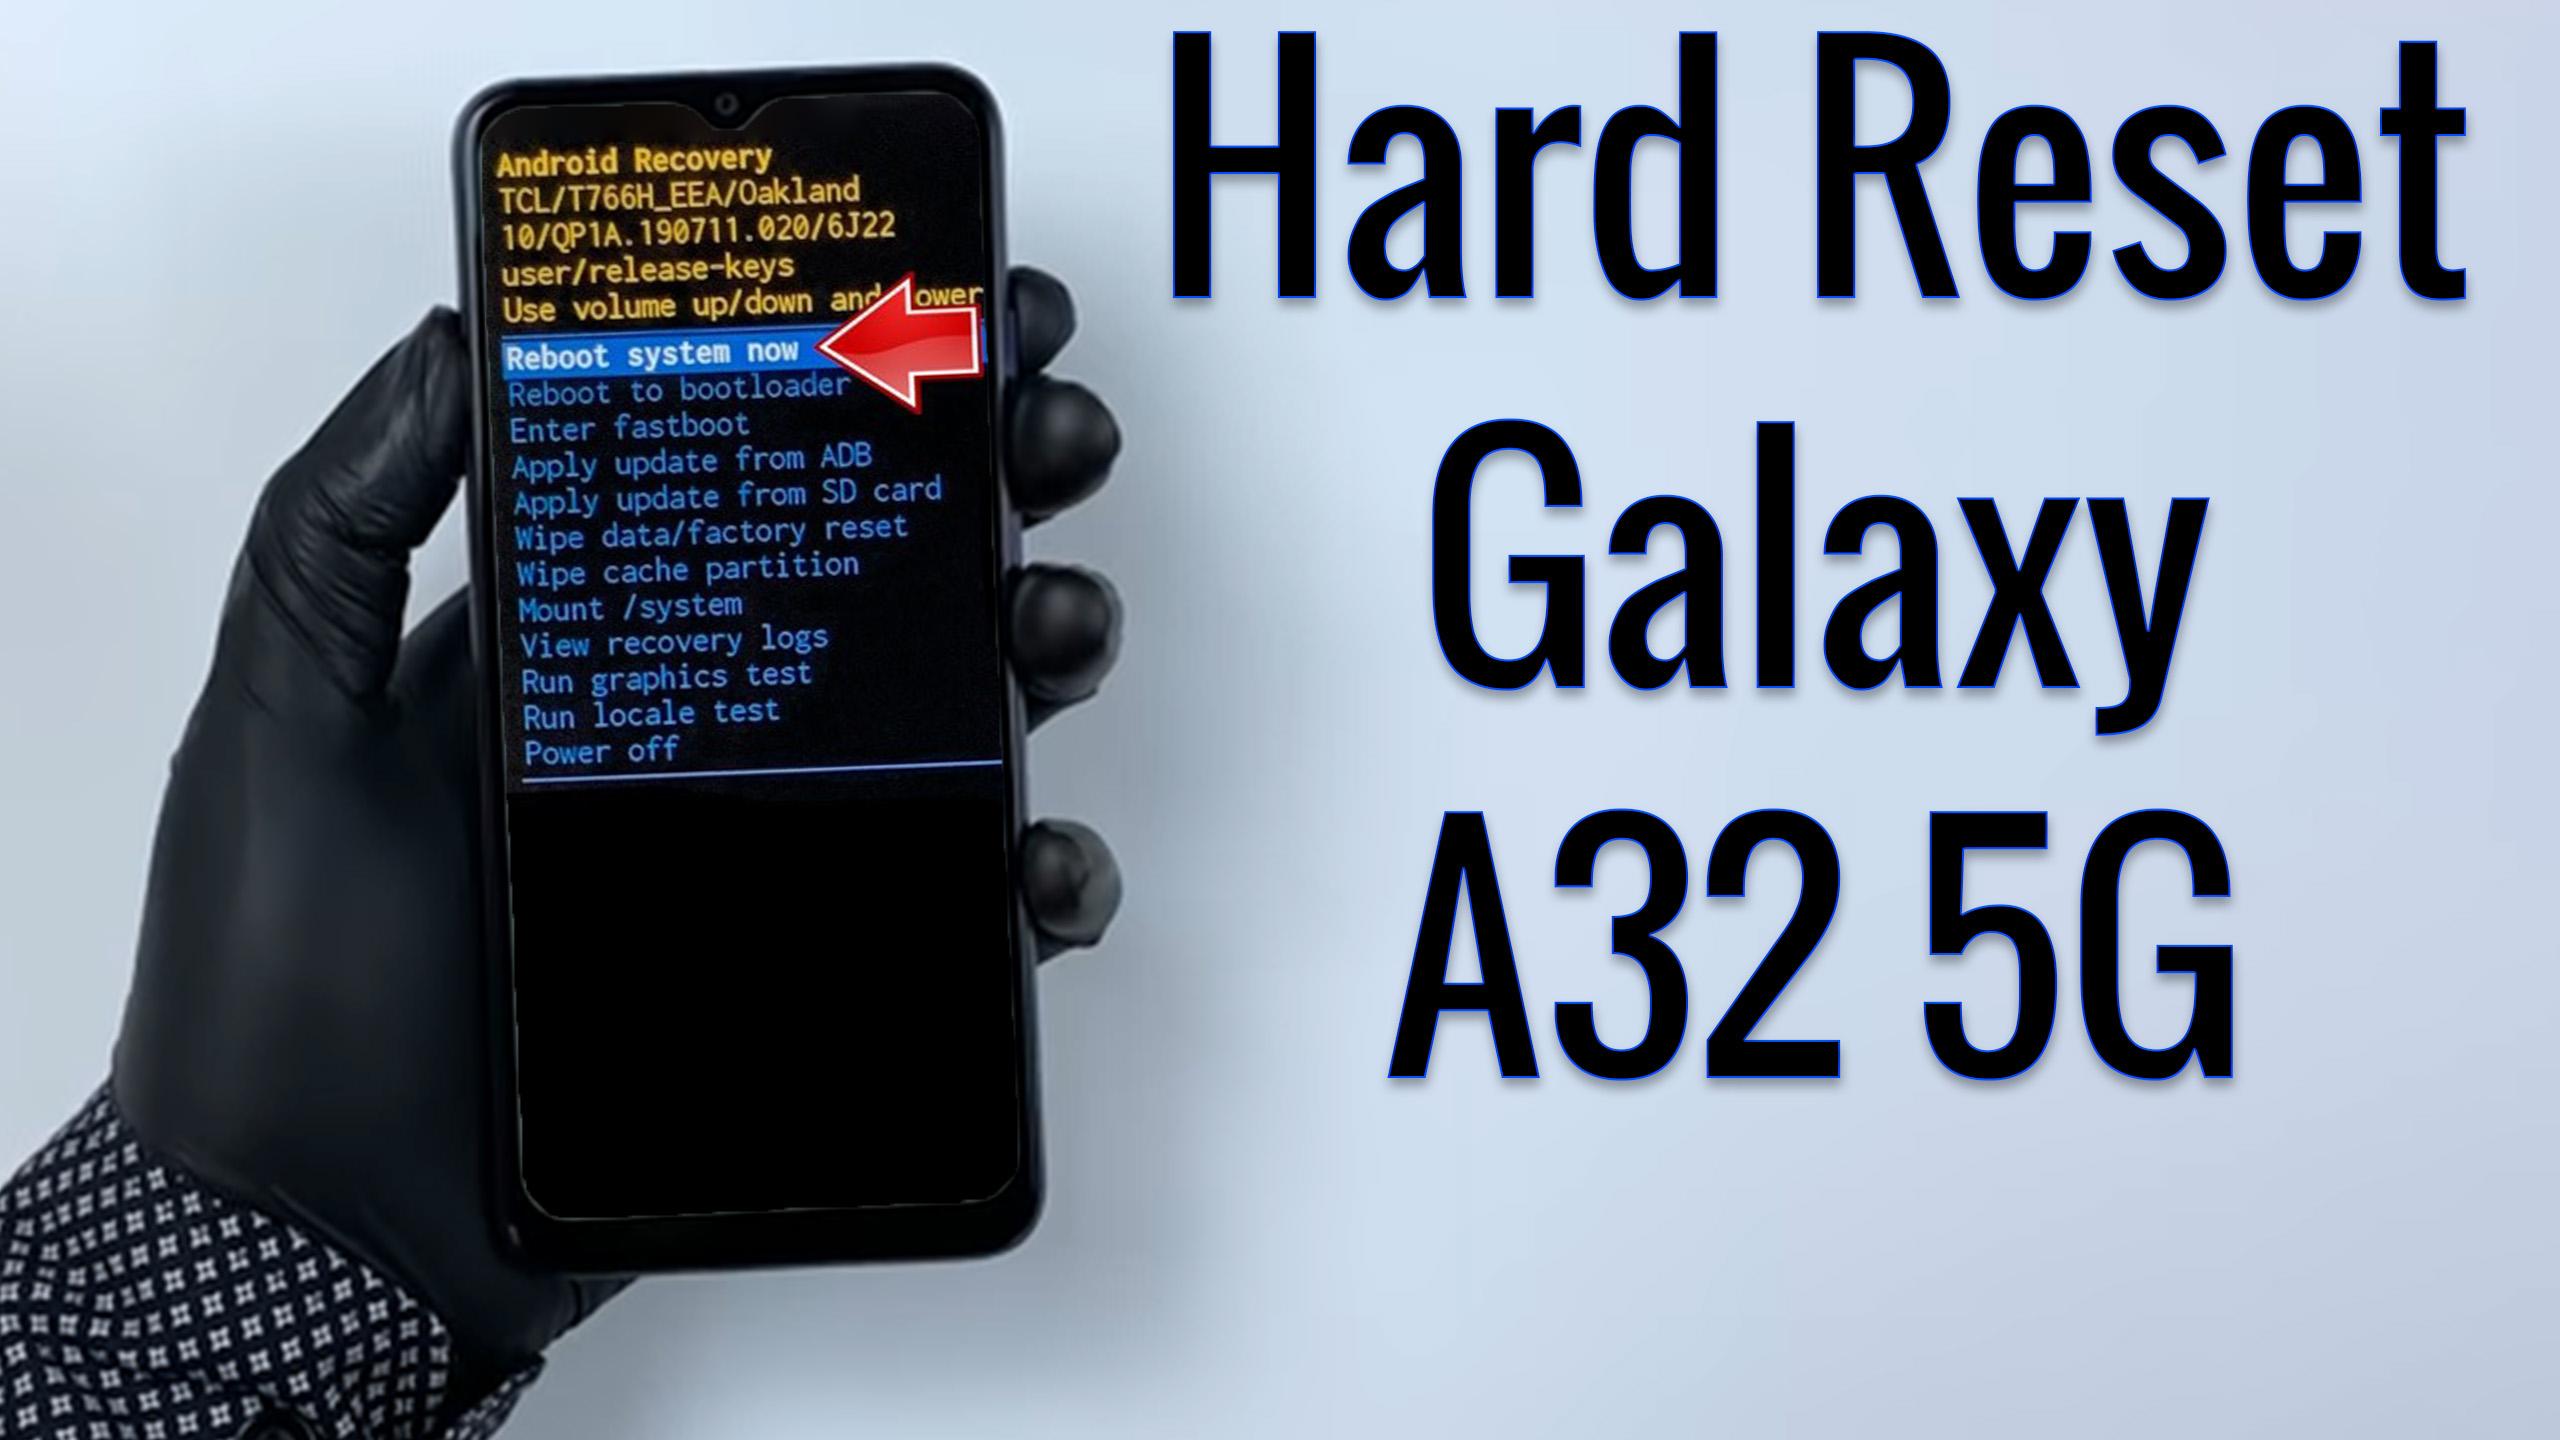 Hard Reset Galaxy A16 16G  Factory Reset Remove Pattern/Lock